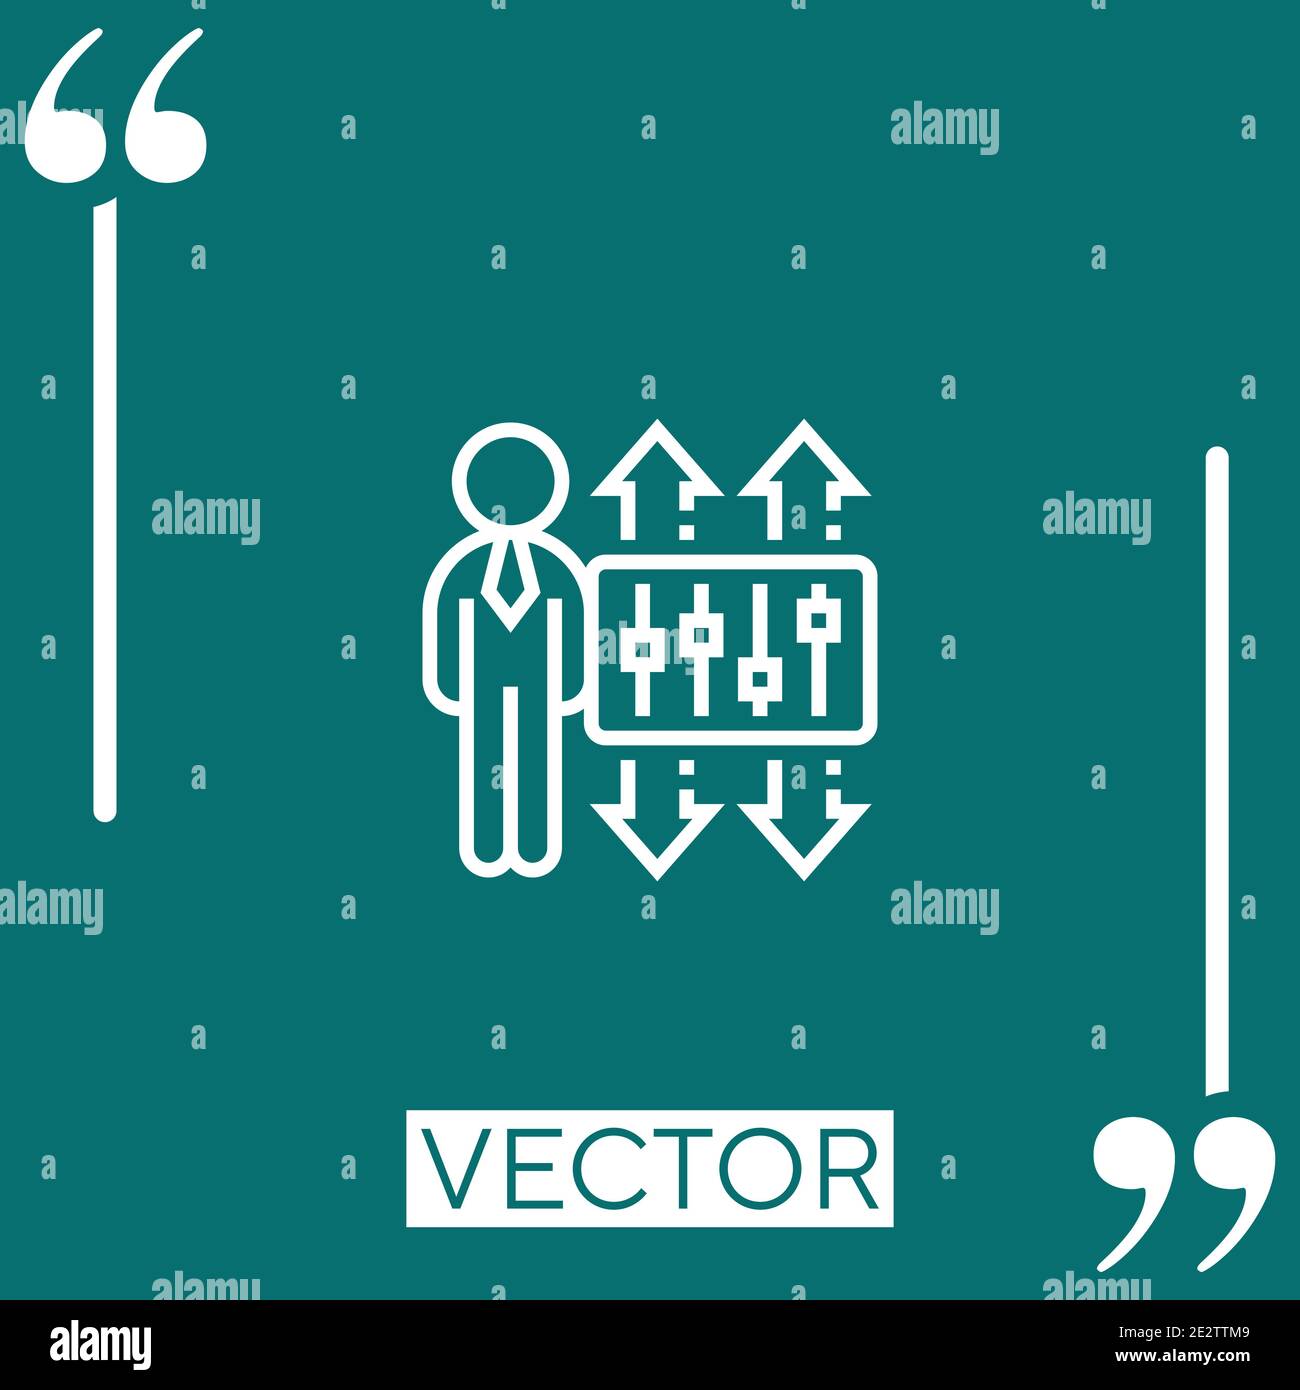 adaptation vector icon Linear icon. Editable stroked line Stock Vector